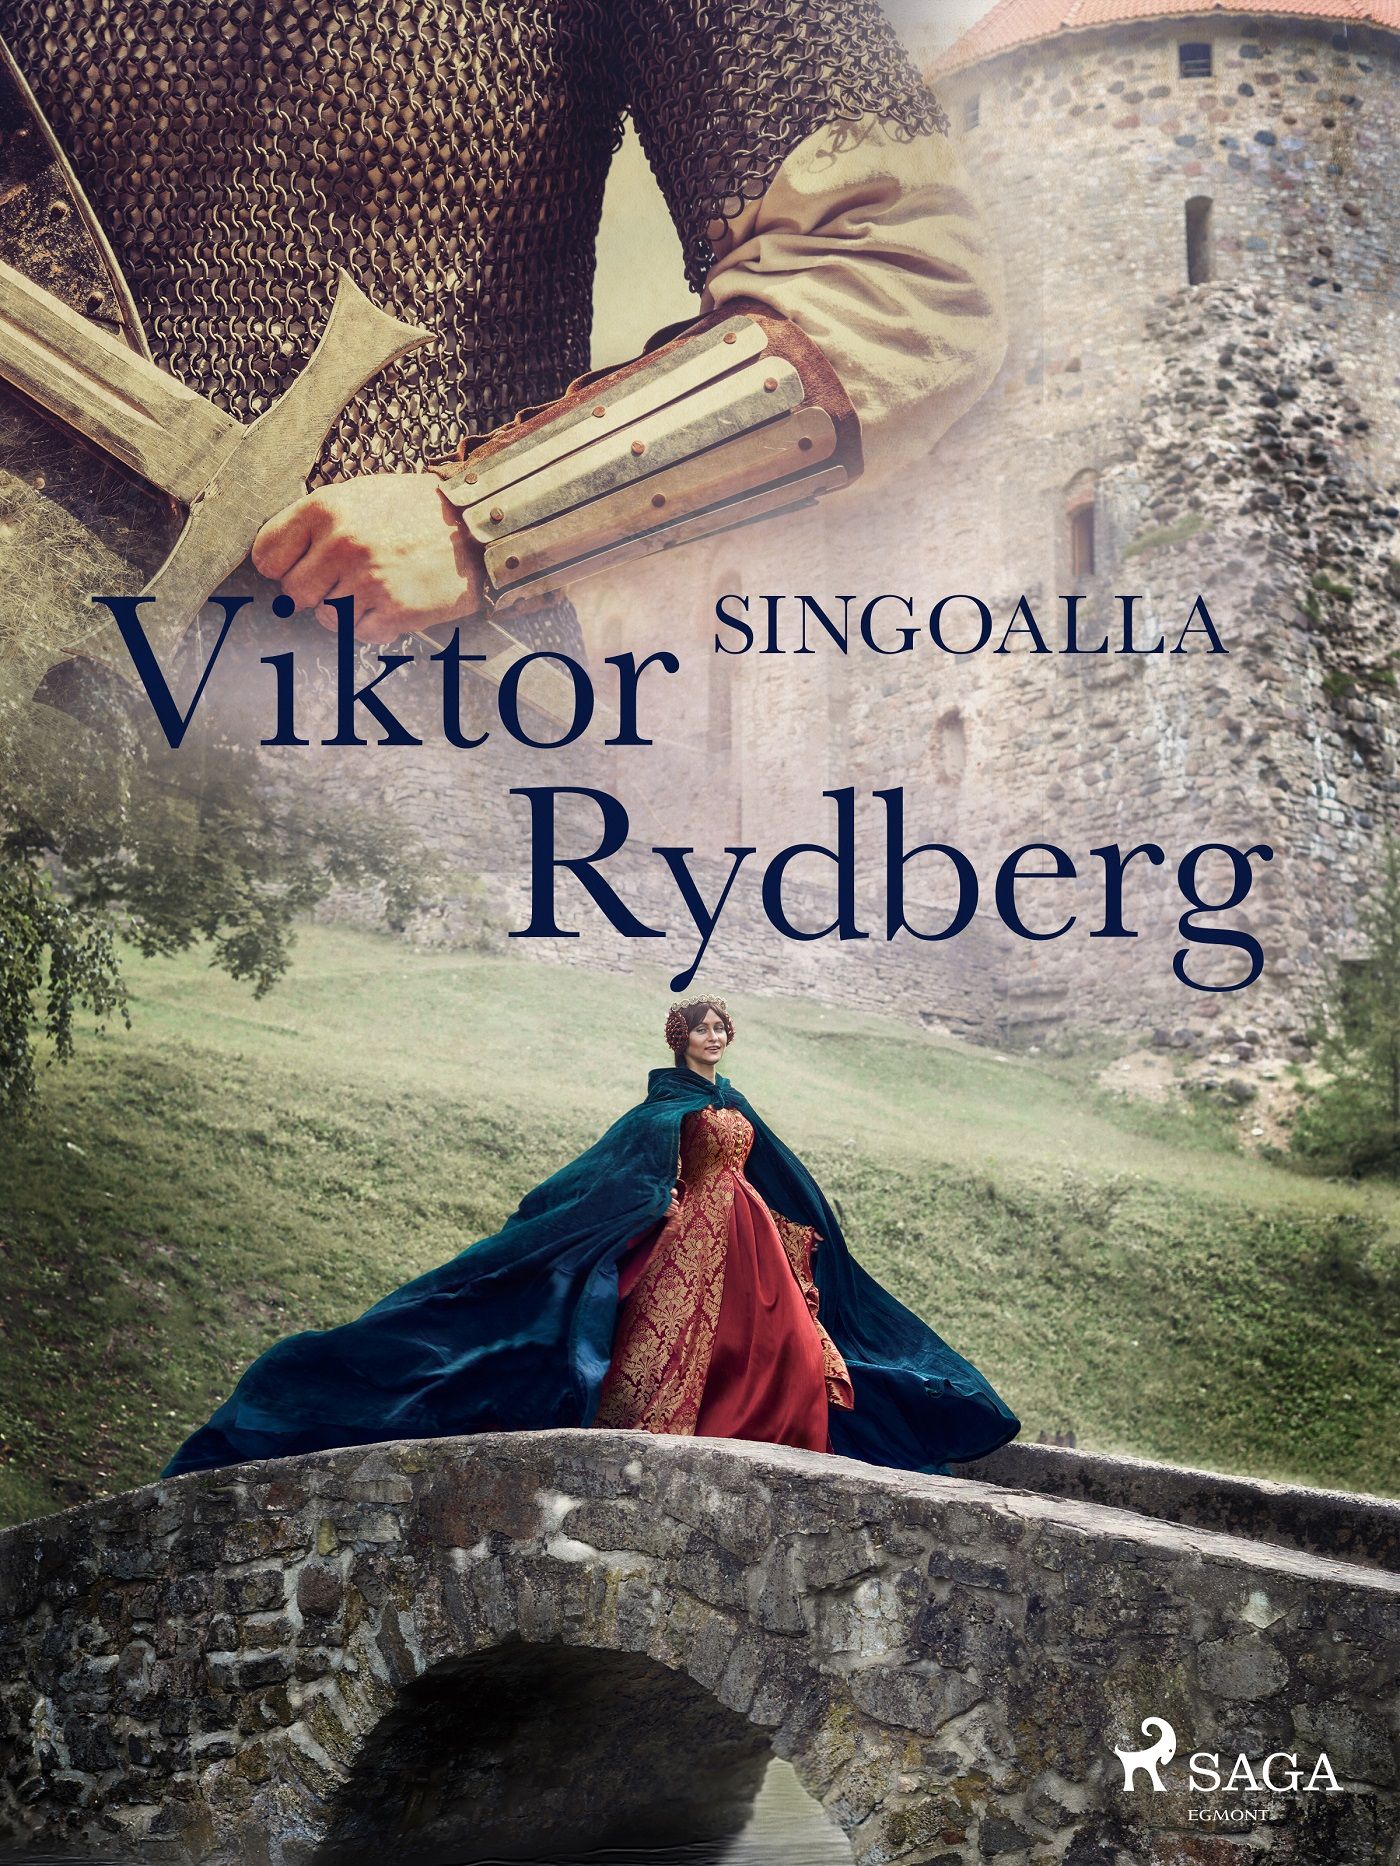 Singoalla, eBook by Viktor Rydberg